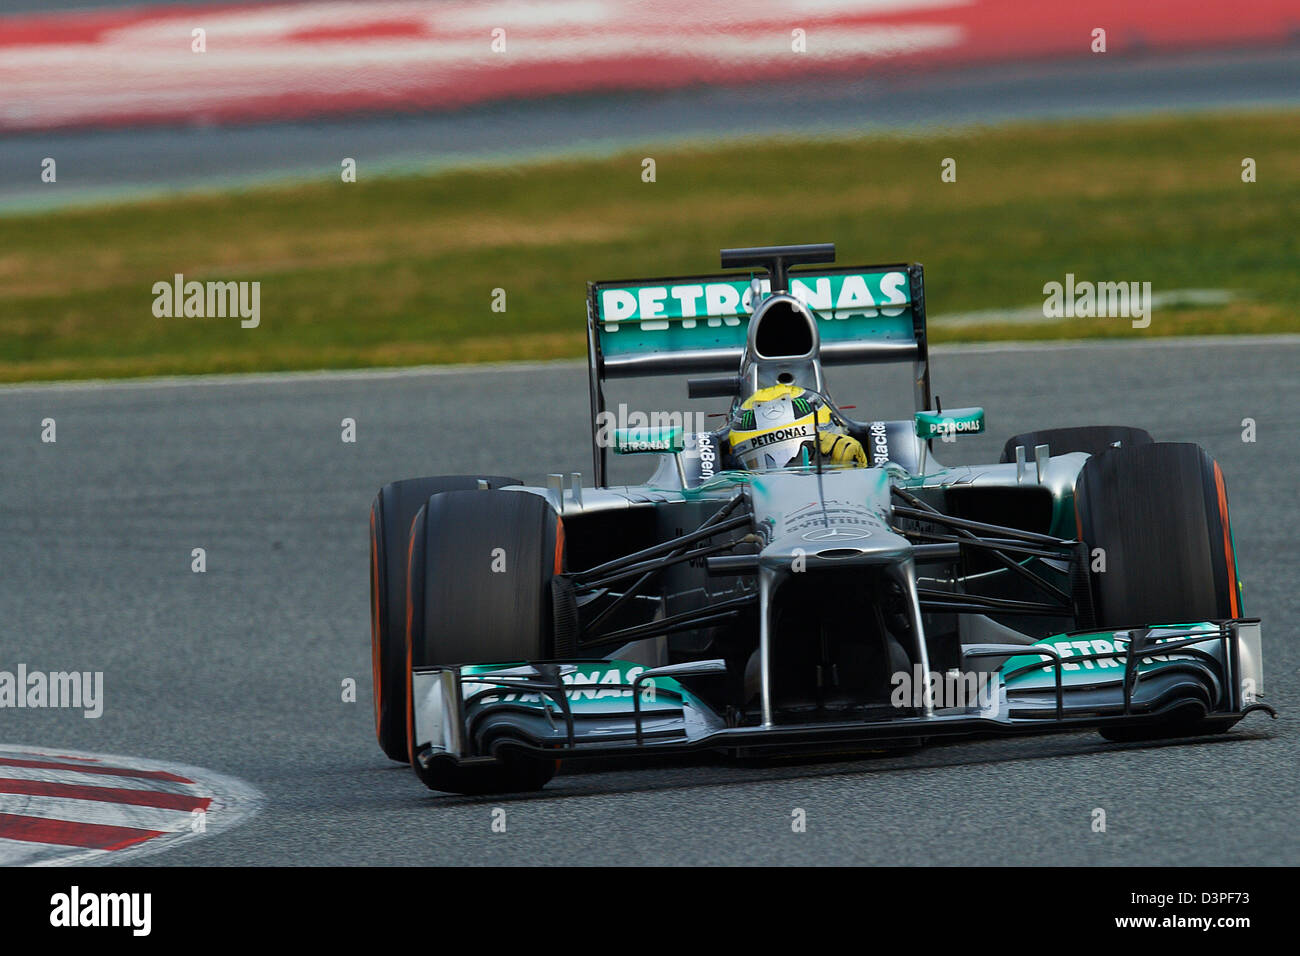 Barcelona, Spanien. 22. Februar 2013.   Nico Rosberg (Mercedes) fährt im Formel1 Winter testen am Circuit de Catalunya. Bildnachweis: Aktion Plus Sportbilder / Alamy Live News Stockfoto